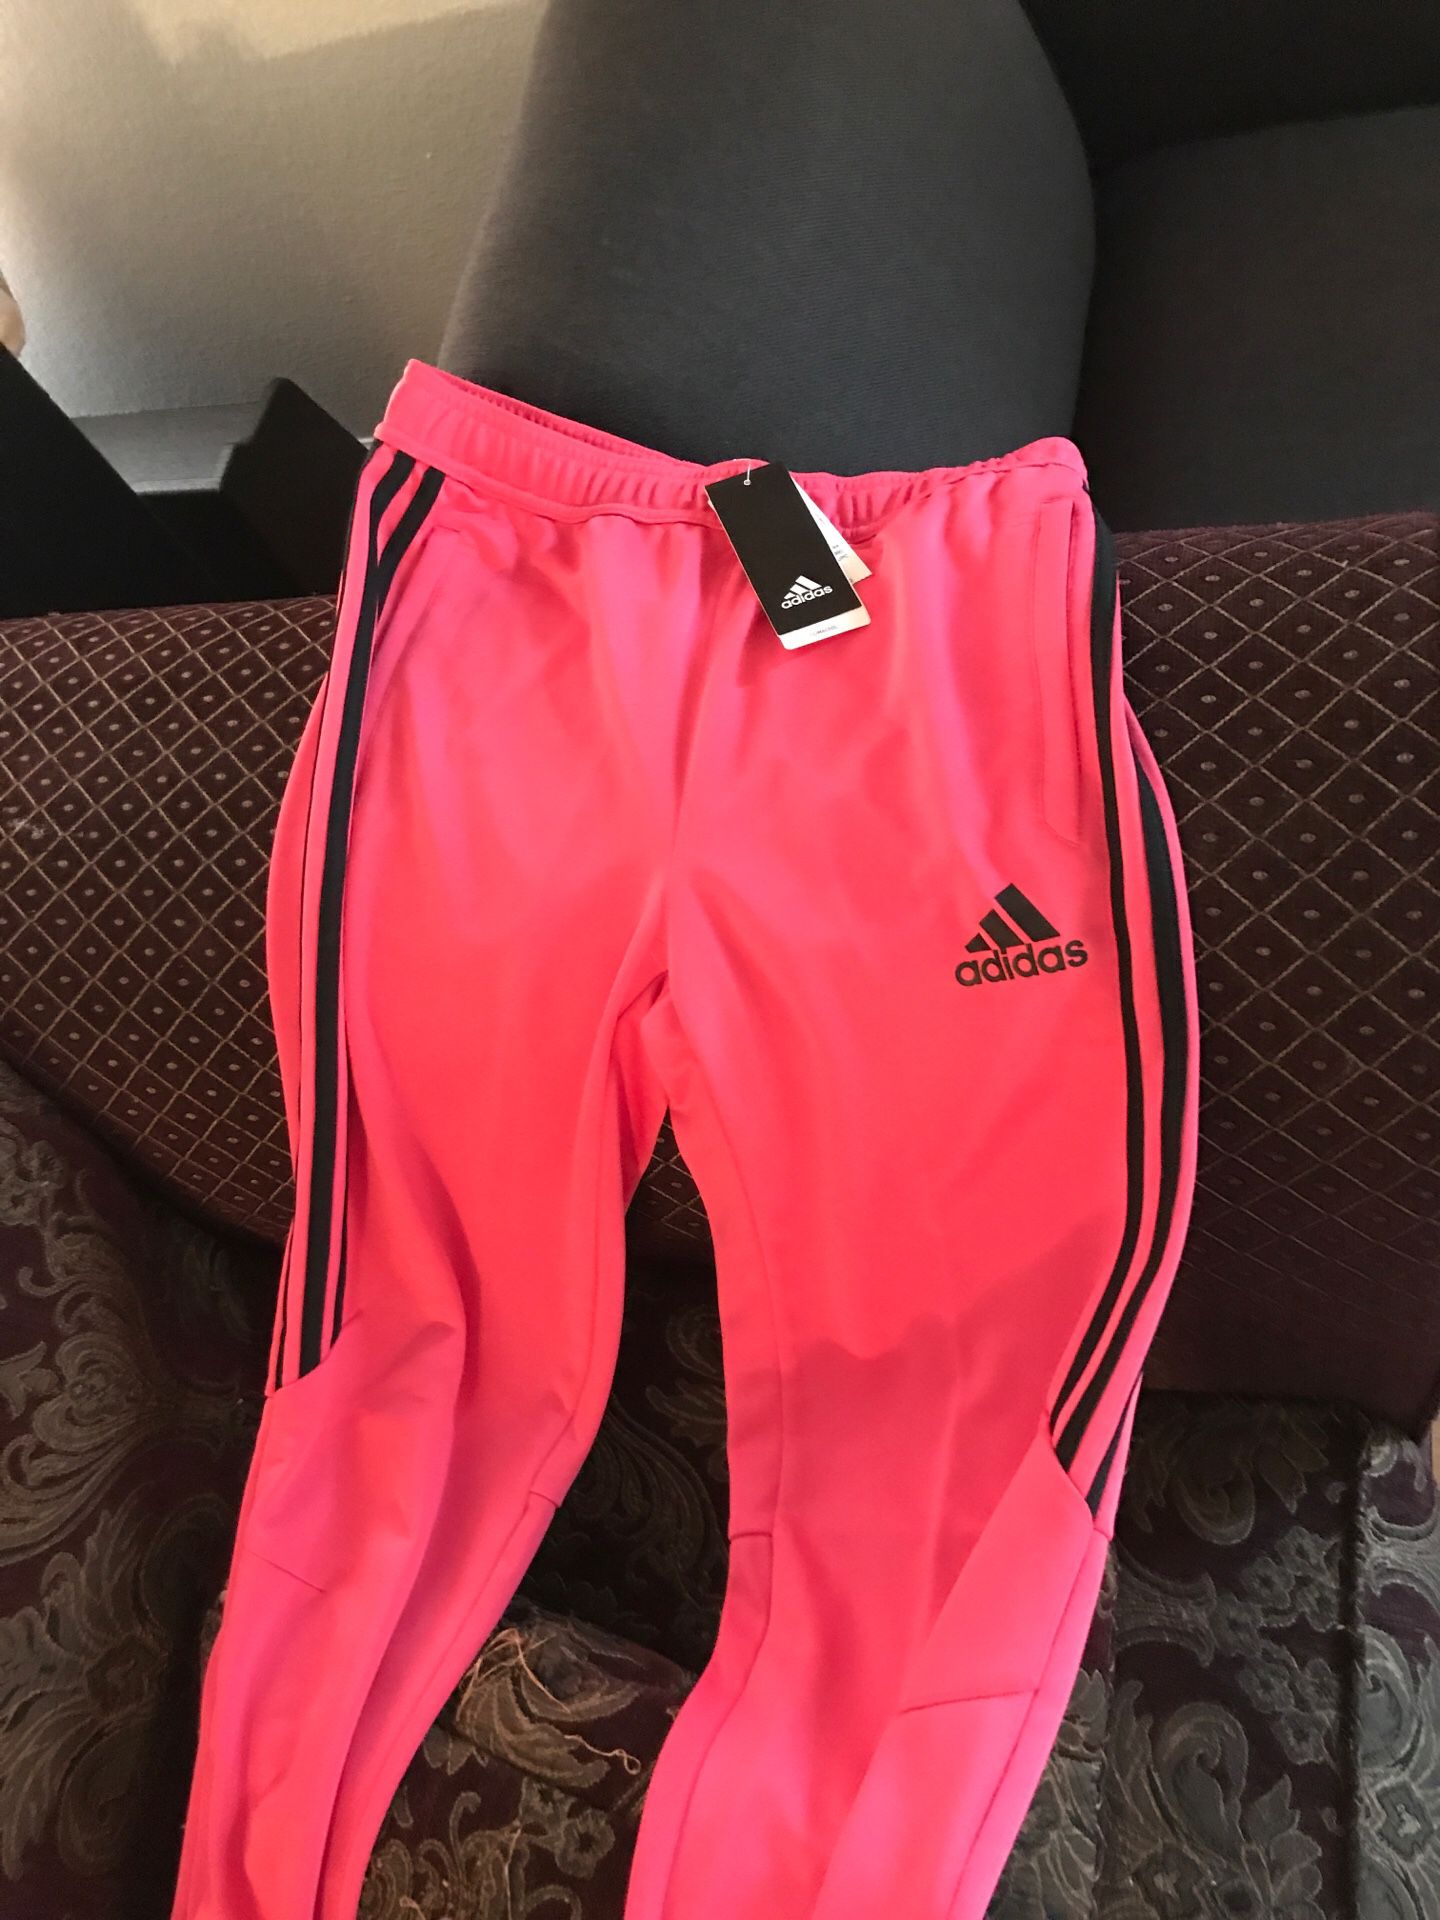 Women’s adidas jogger pants Size L (new)